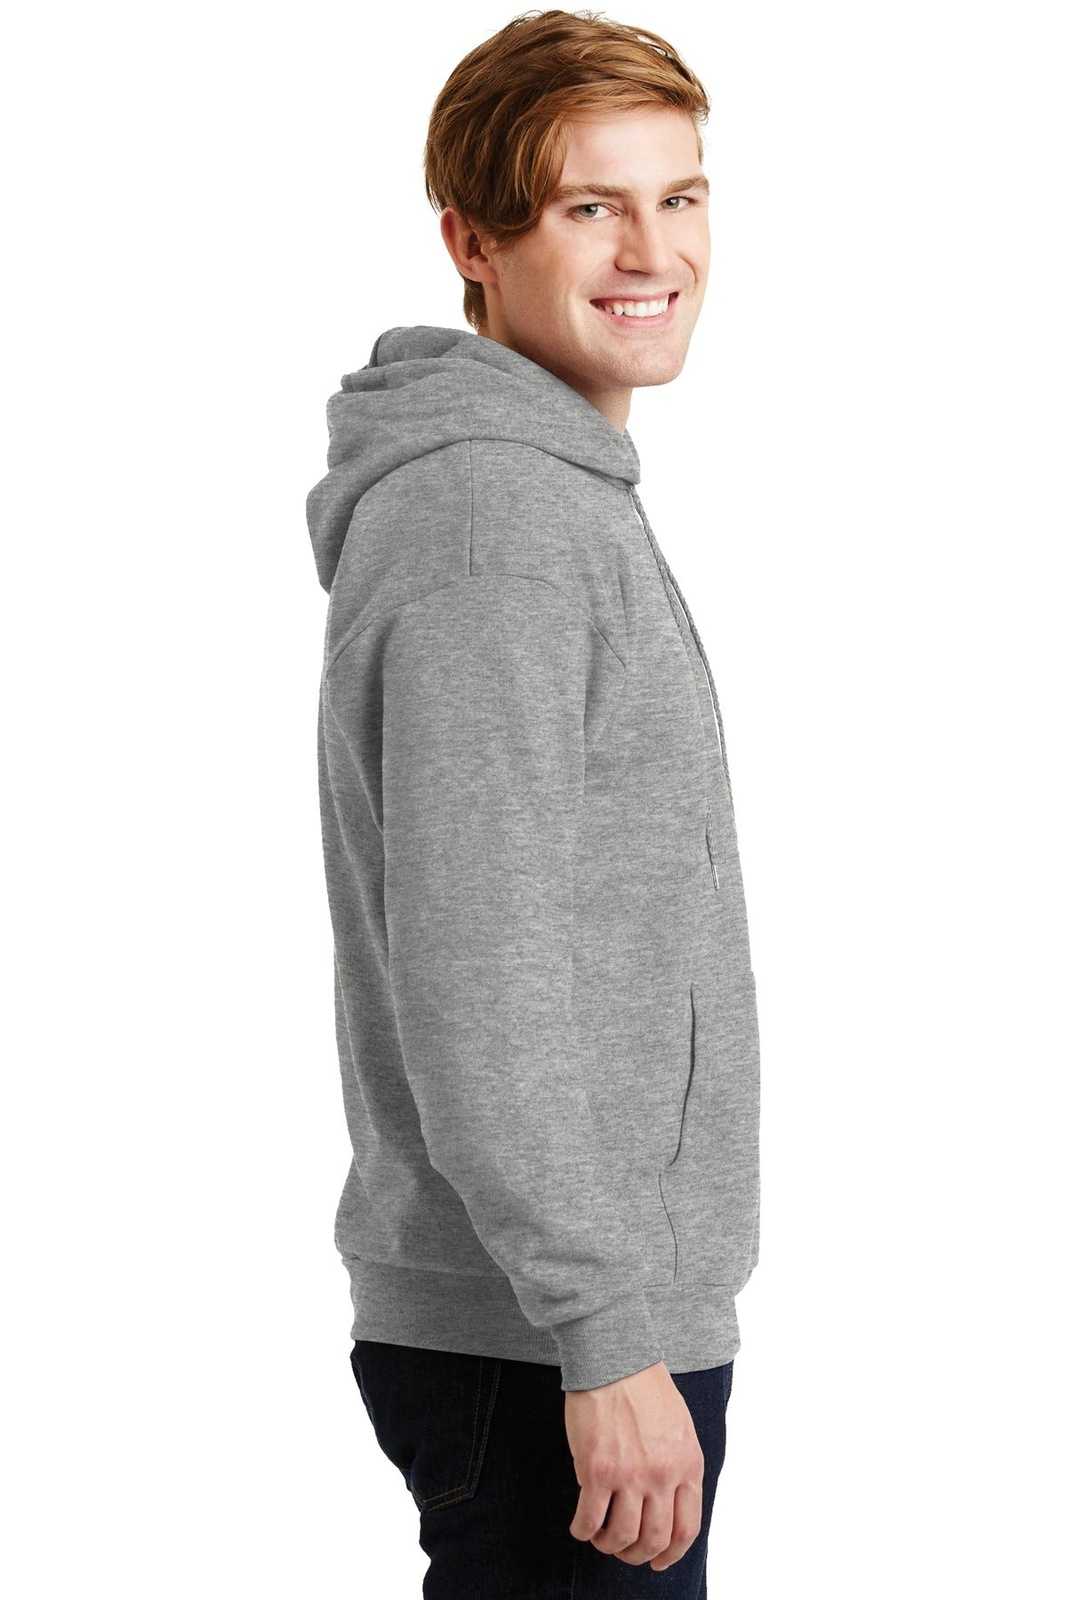 Hanes P170 Ecosmart Pullover Hooded Sweatshirt - Light Steel - HIT a Double